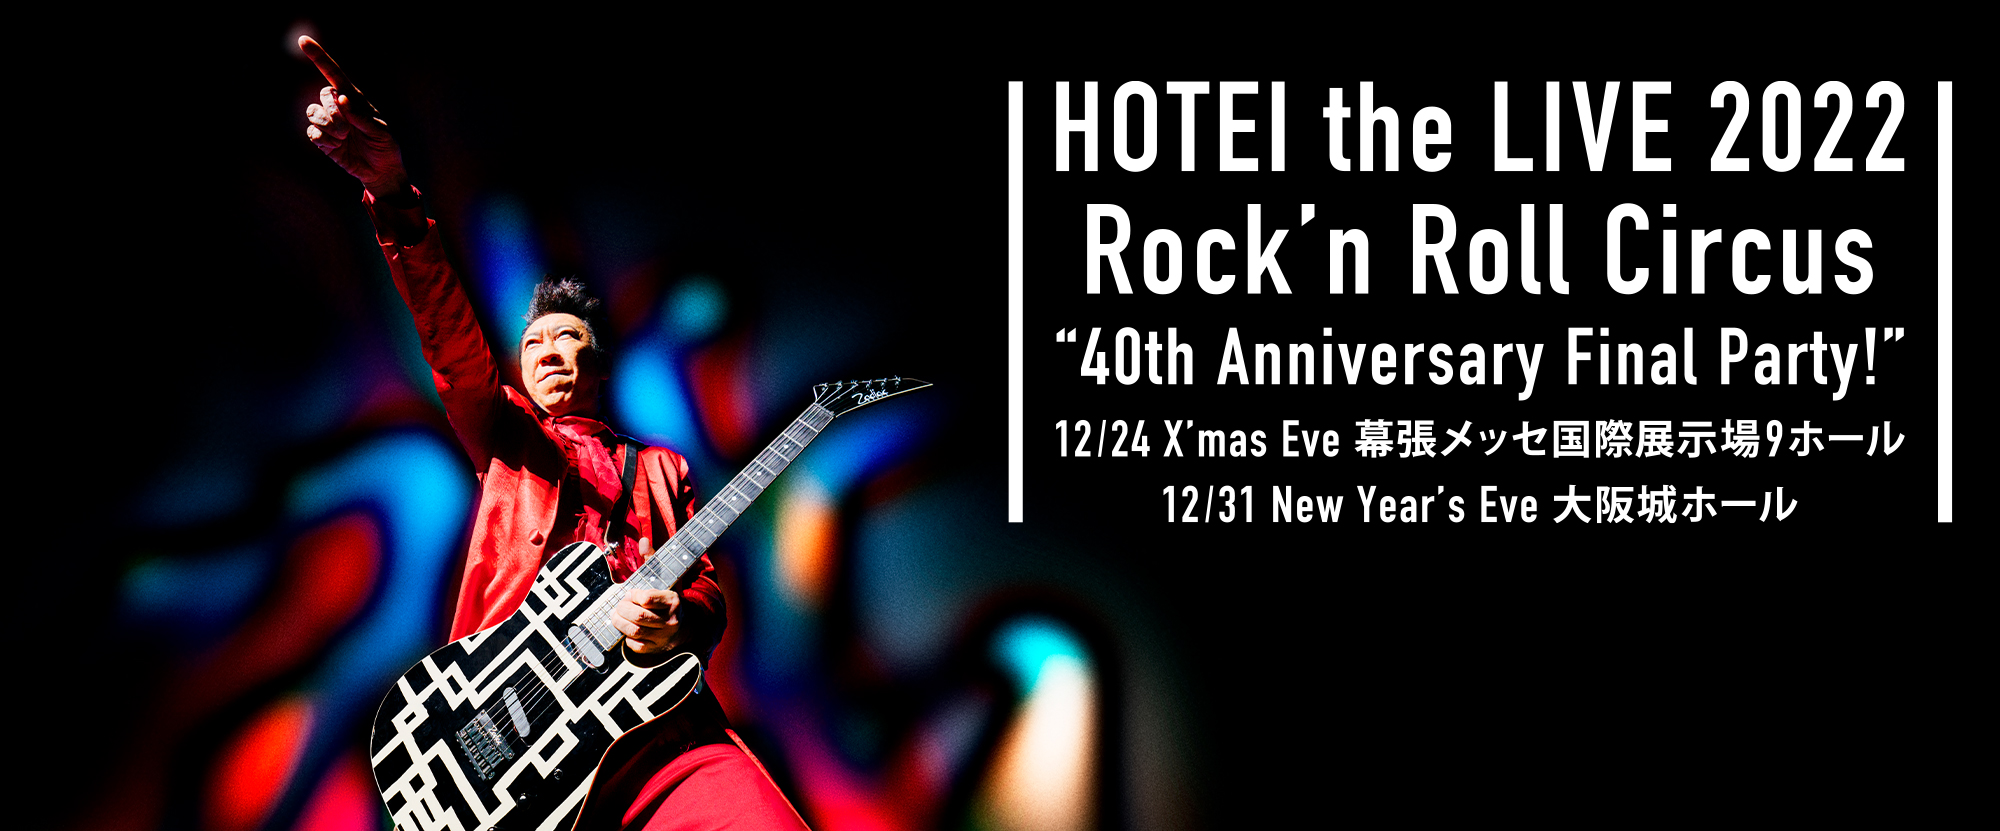 HOTEI the LIVE 2022 Rock'n Roll Circus “40th Anniversary Final 